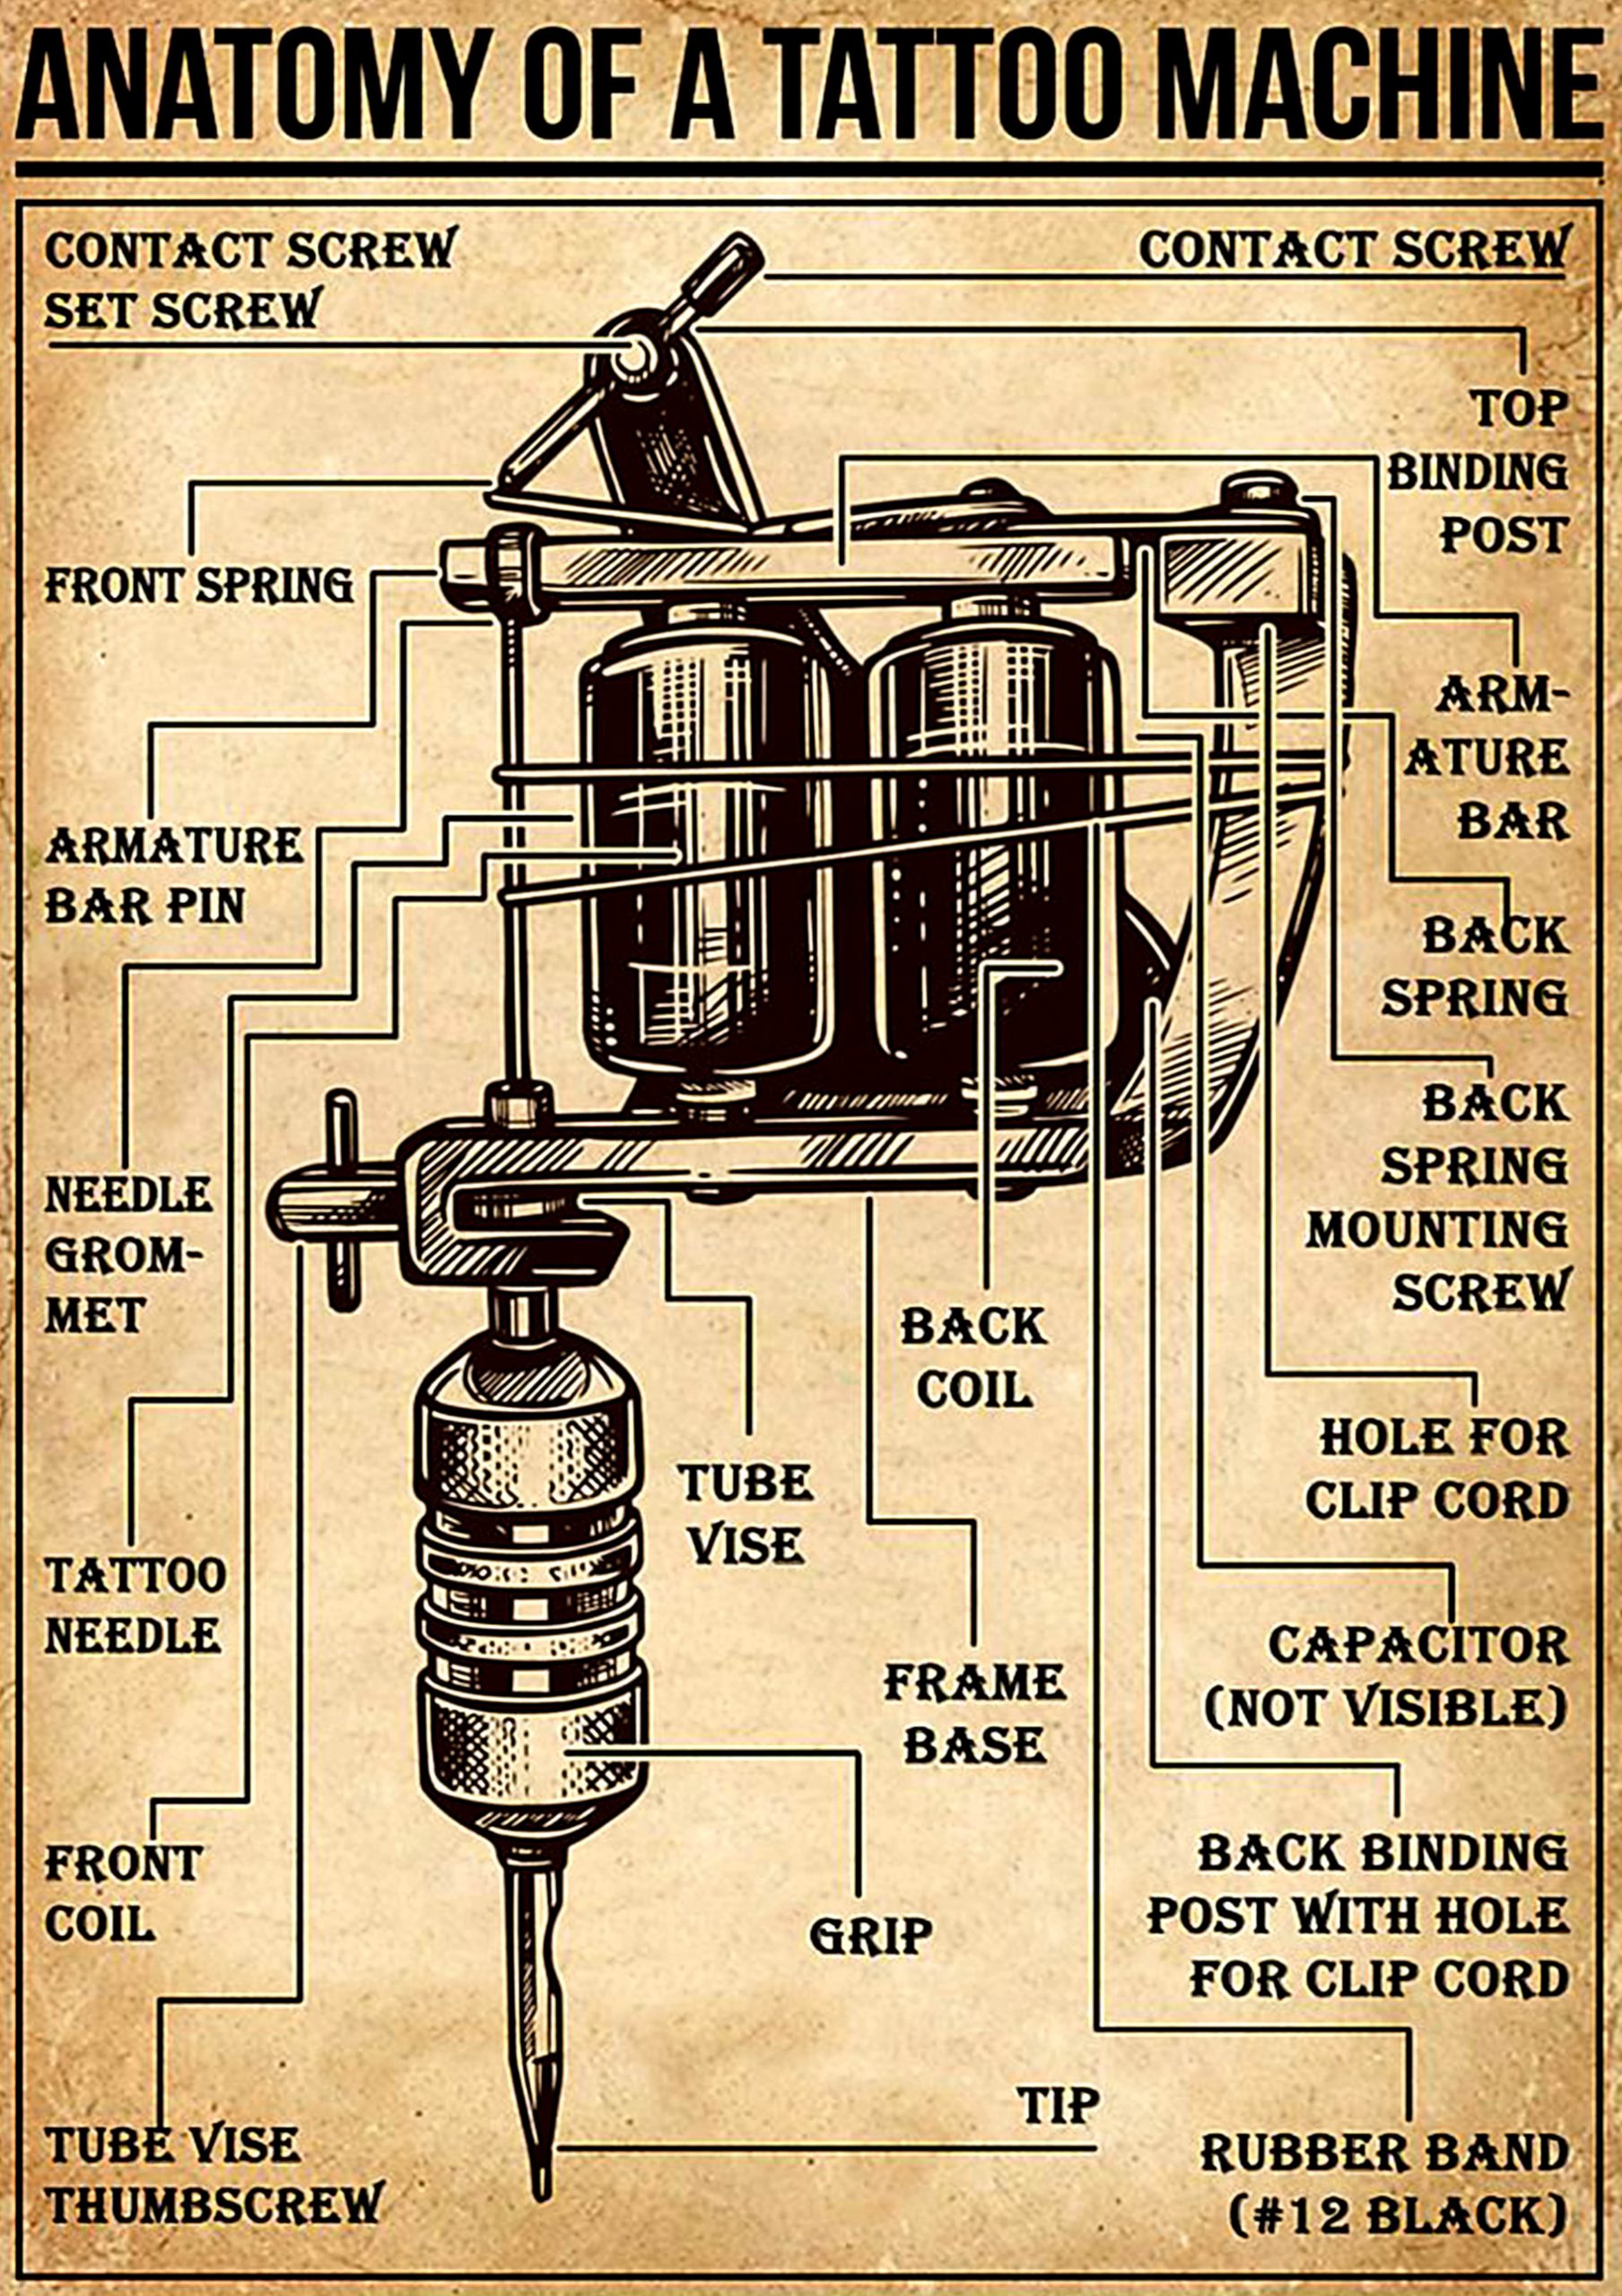 vintage anatomy of a tattoo machine poster 1